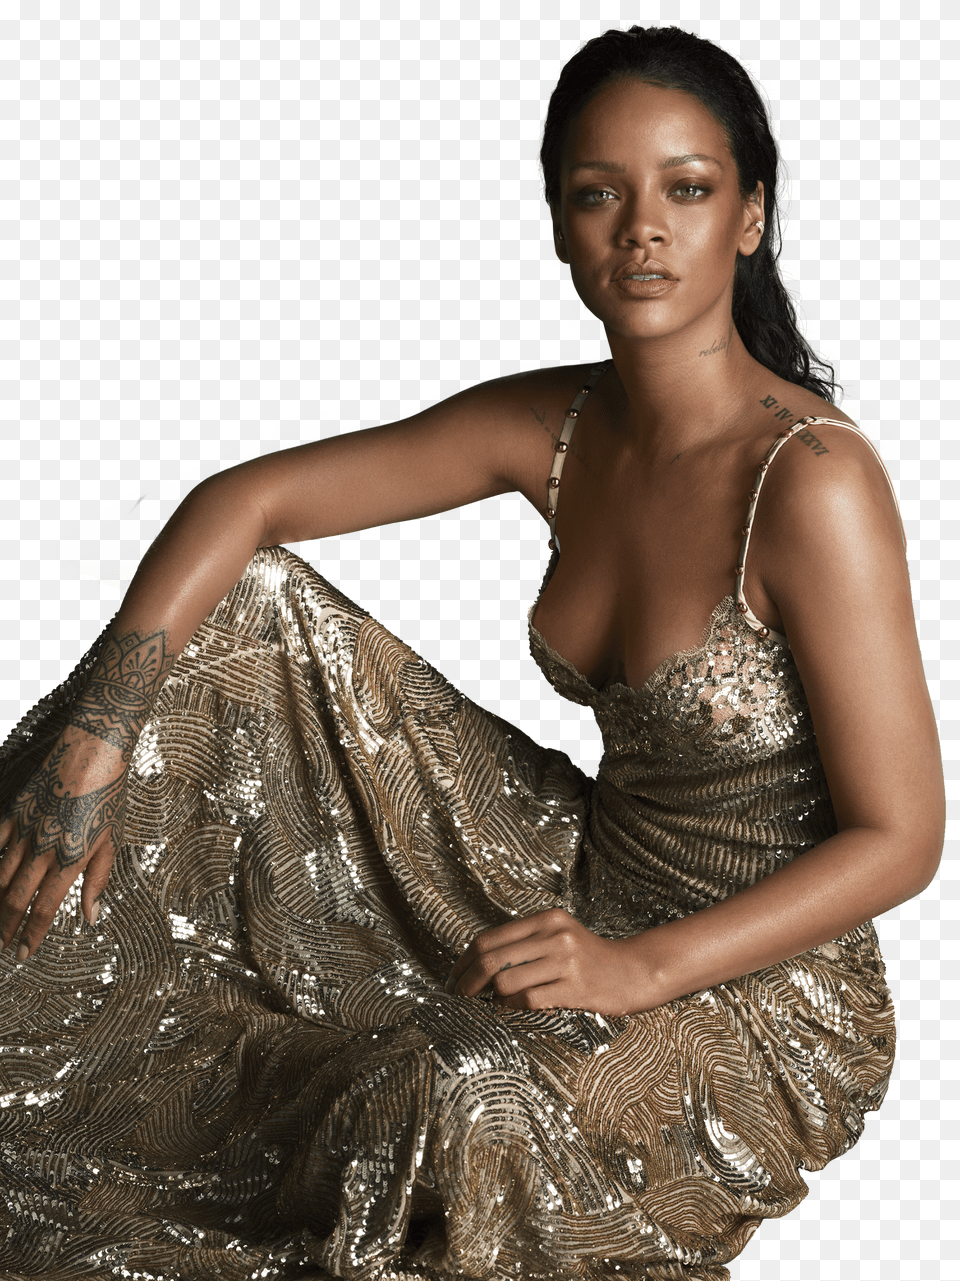 Download Rihanna Rihanna Gold Dress Png Image